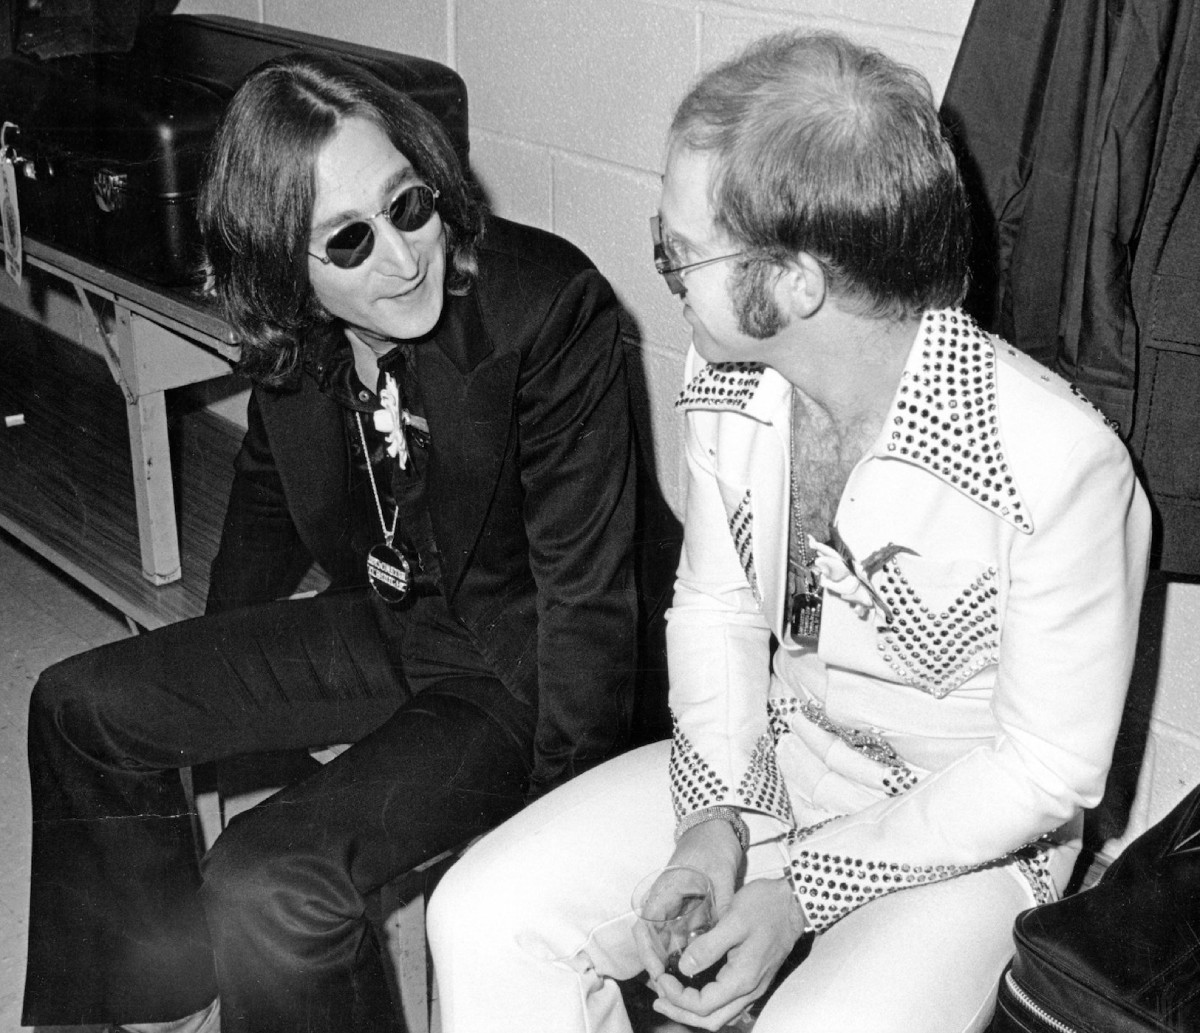 John Lennon and Elton John were friends...